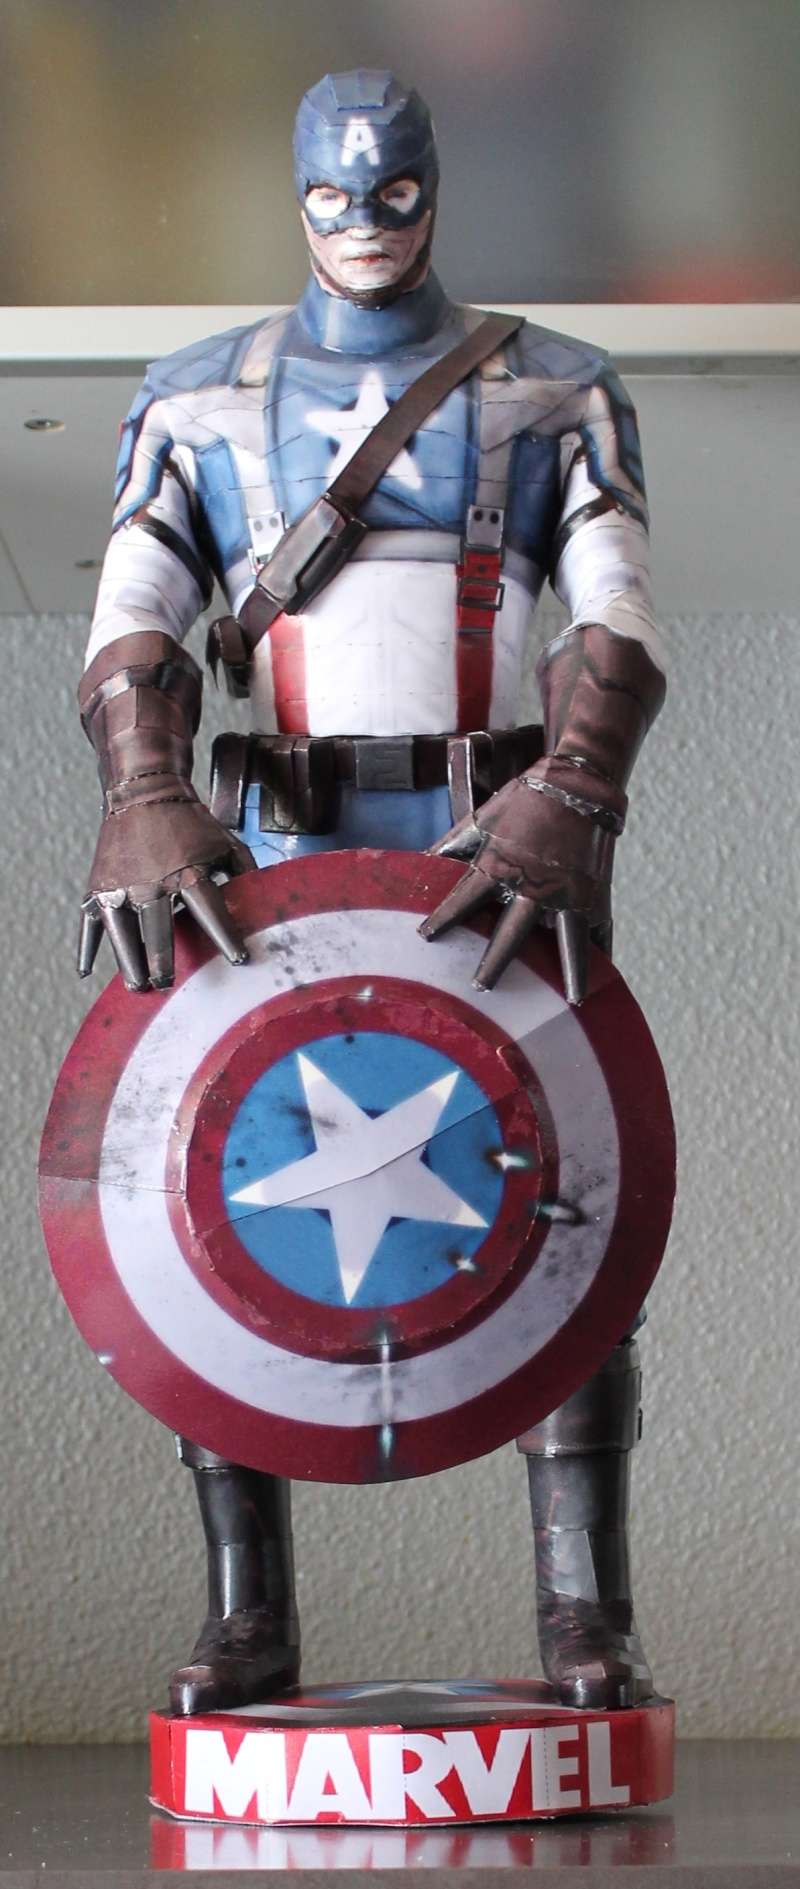 Marvel Captain America Sans_t10